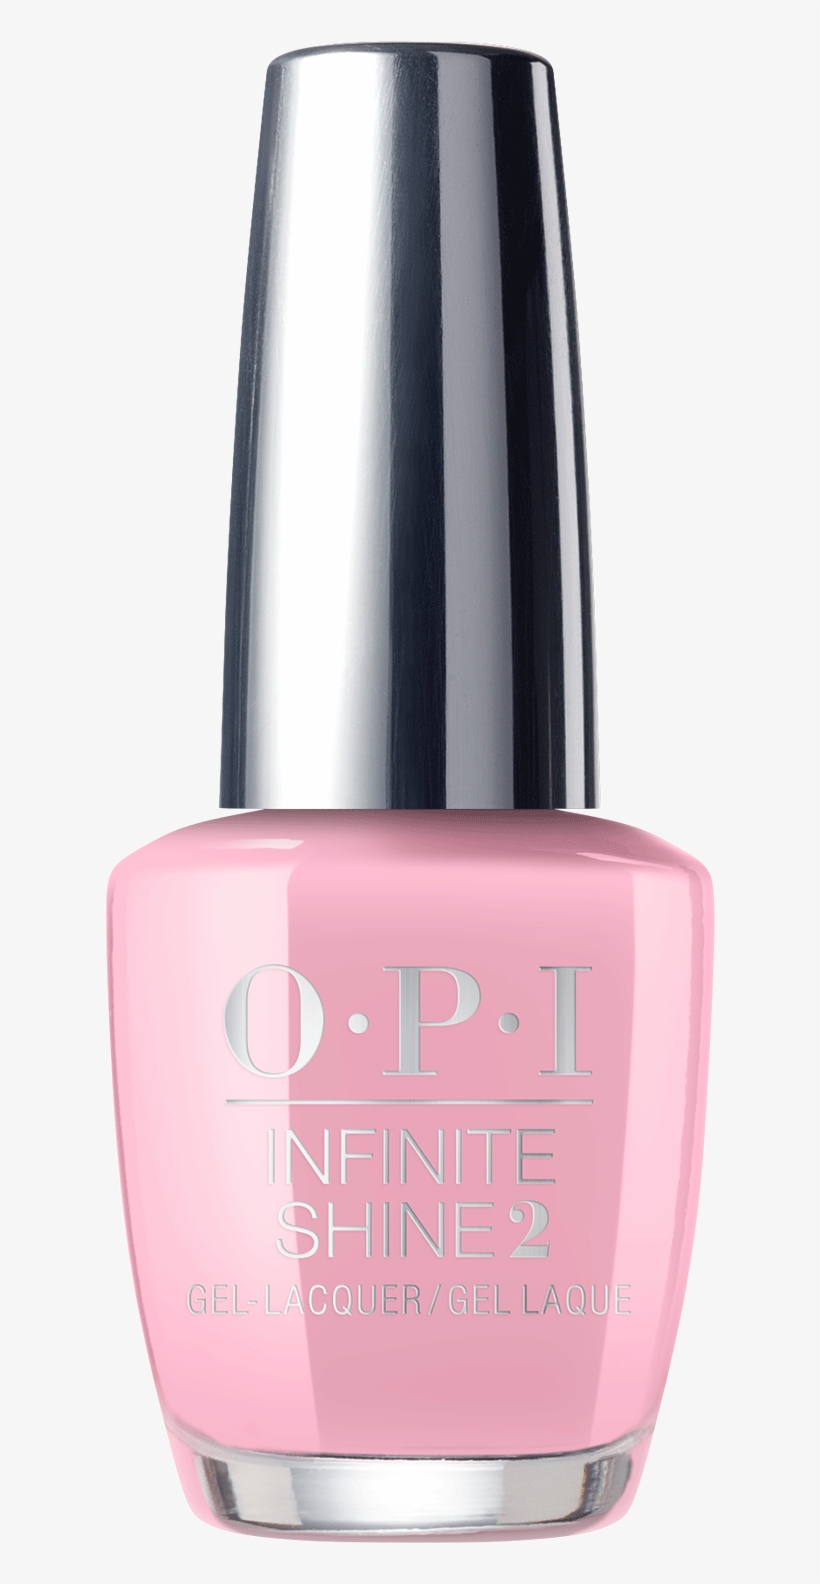 Opi Infinite Shine - Opi Infinite Shine - It's A Girl, transparent png #563534